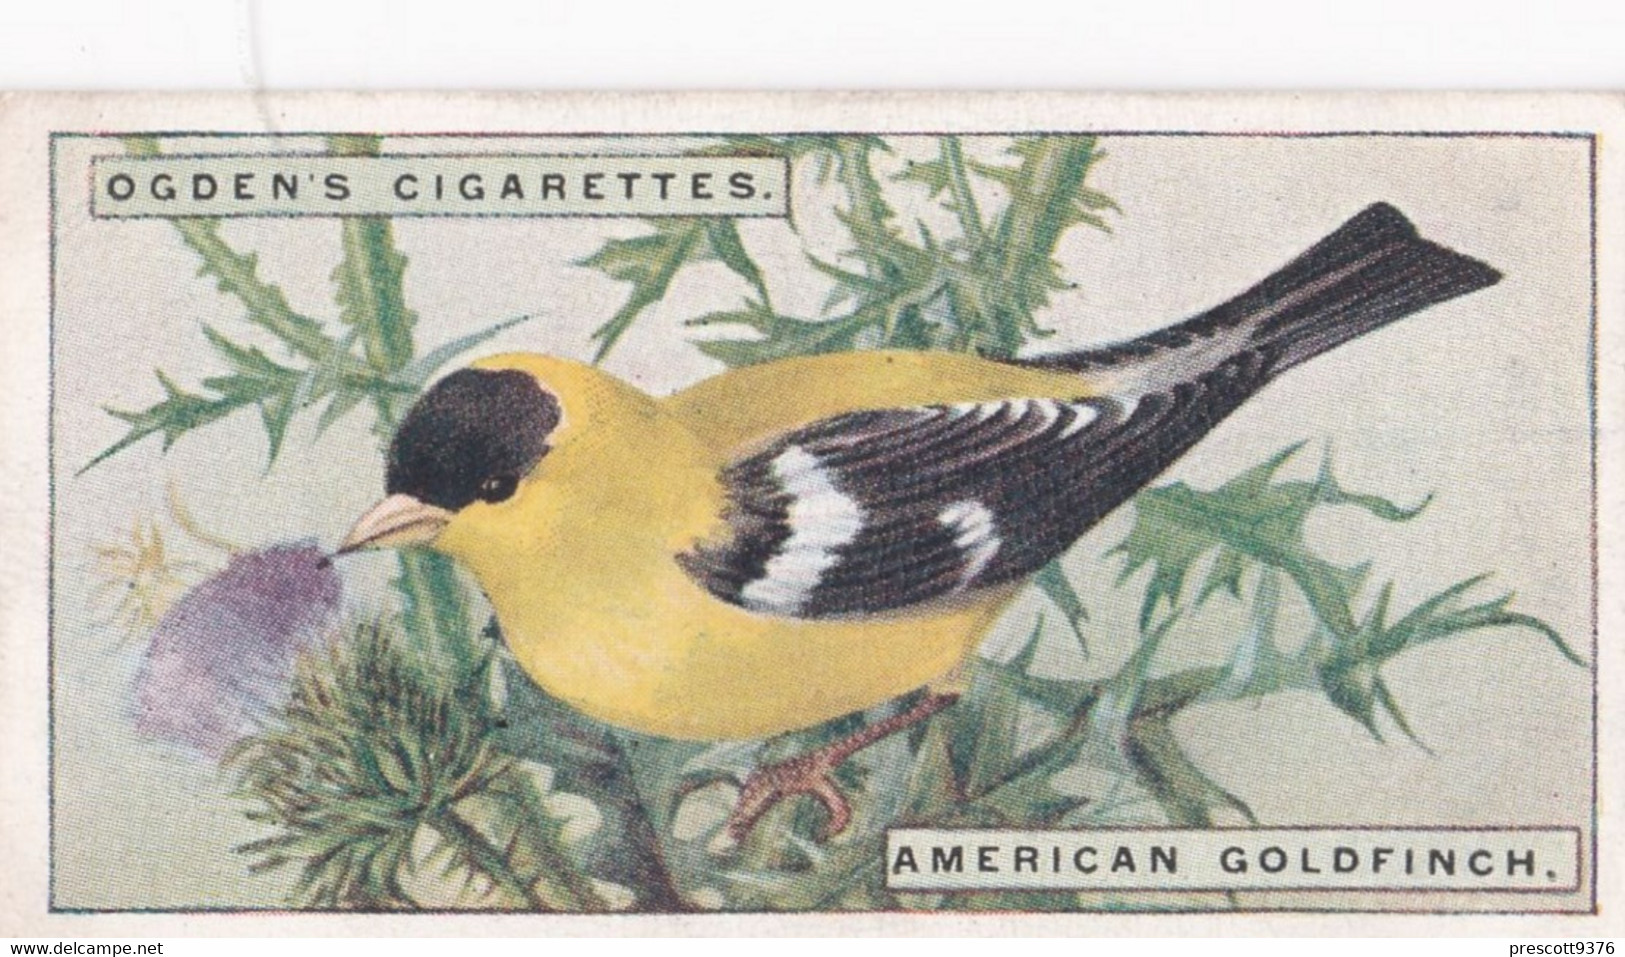 19 American Goldfinch  - Foreign Birds 1924 - Ogdens  Cigarette Card - Original - Wildlife - Ogden's